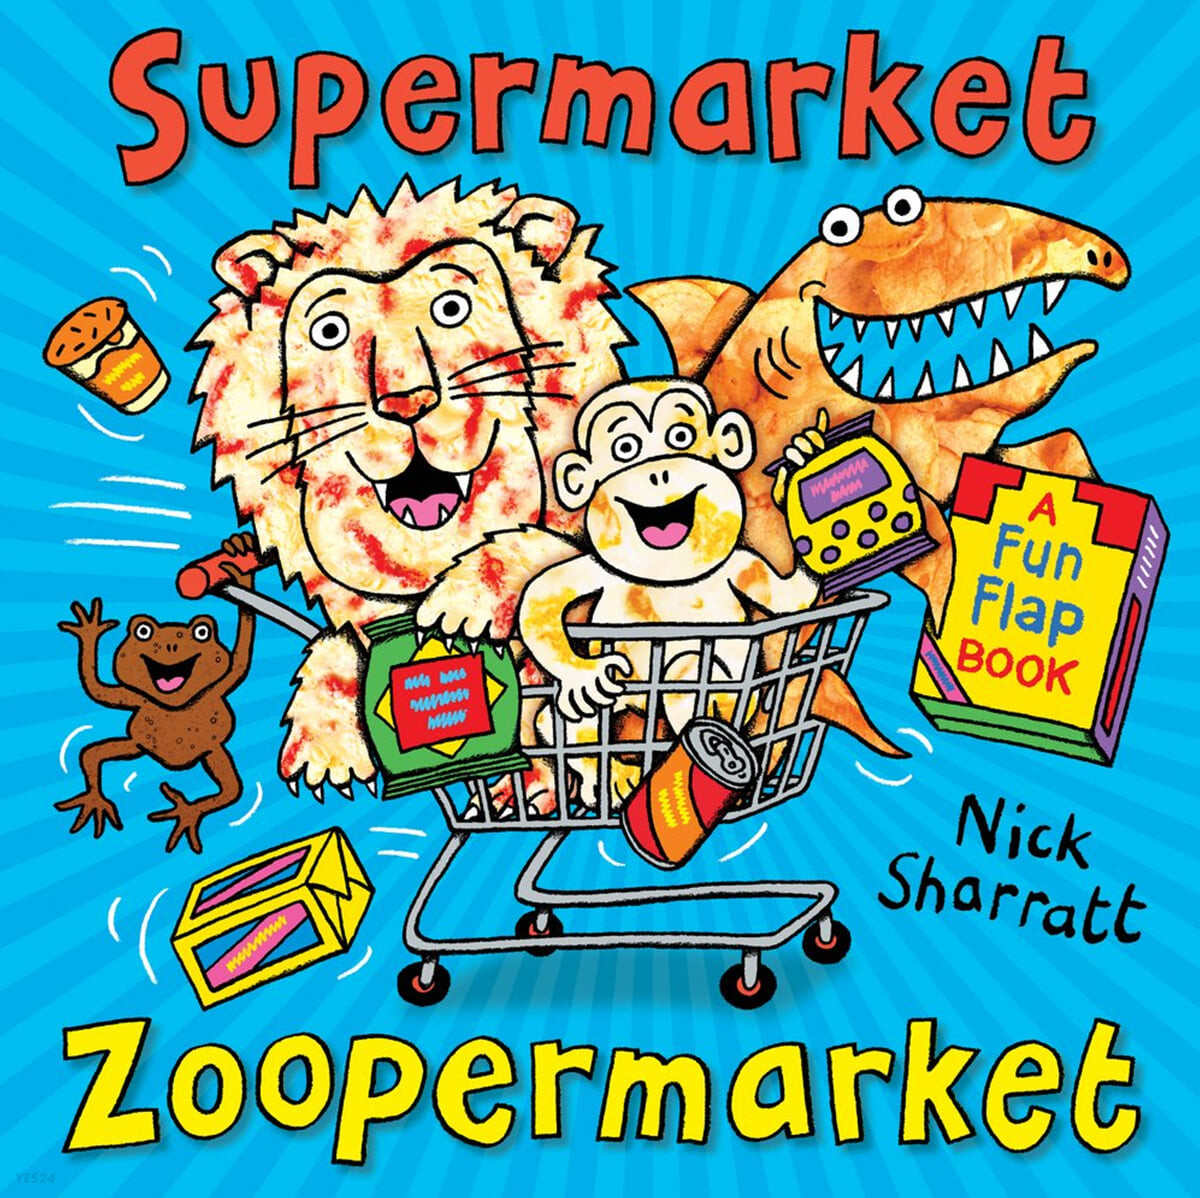 Supermarket zoopermarket : A Fun flap book